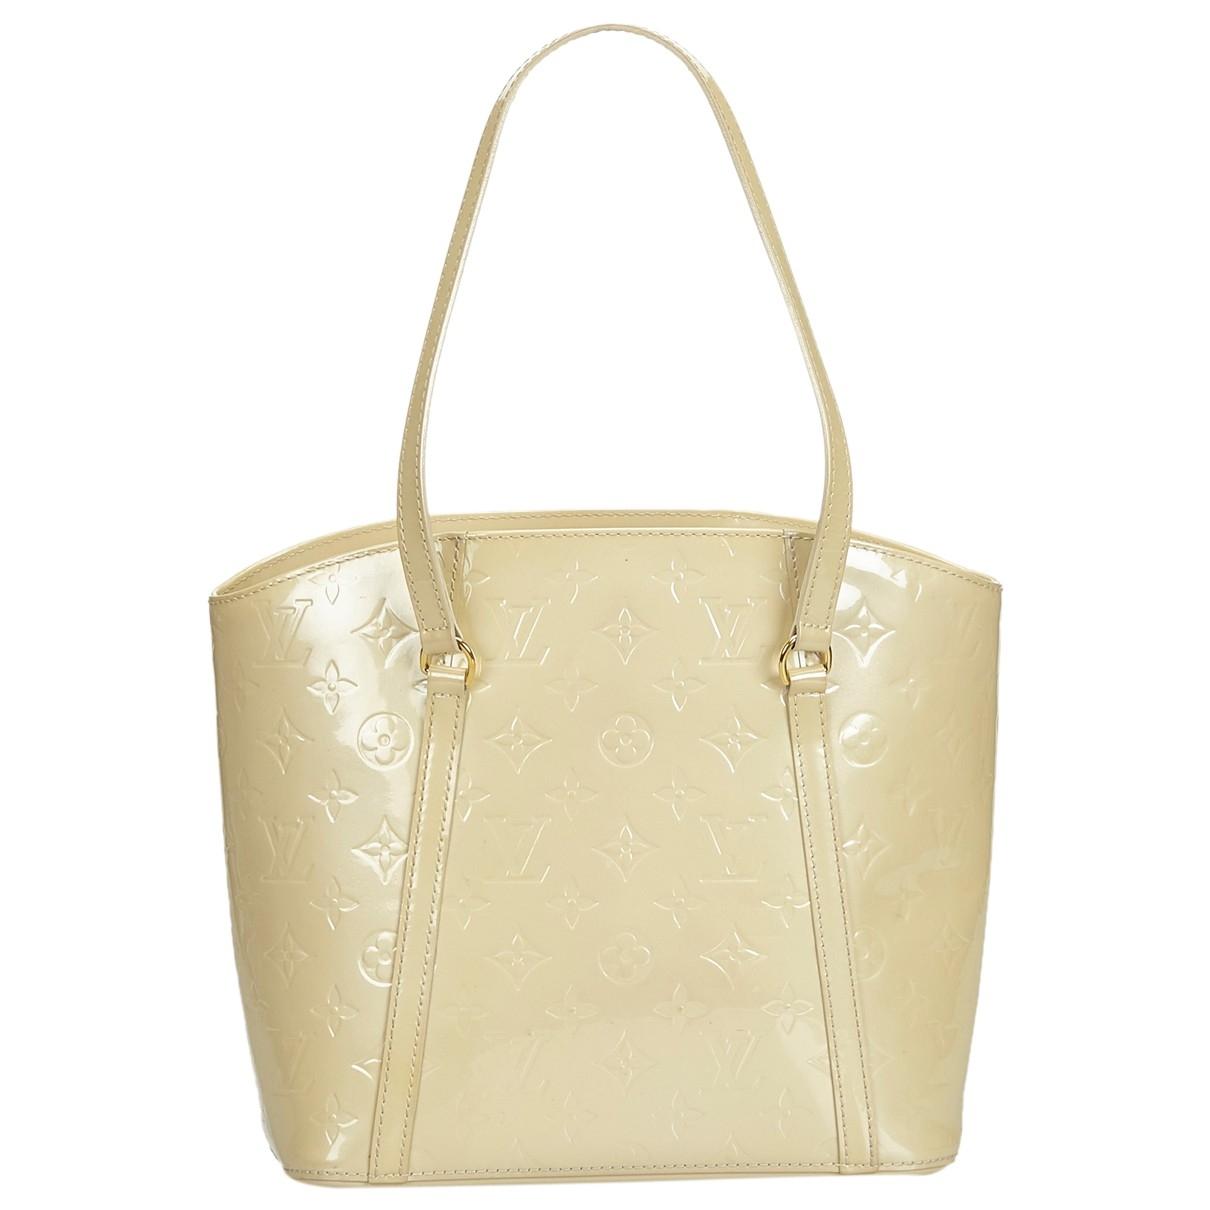 Lyst - Louis Vuitton White Patent Leather Handbag in White